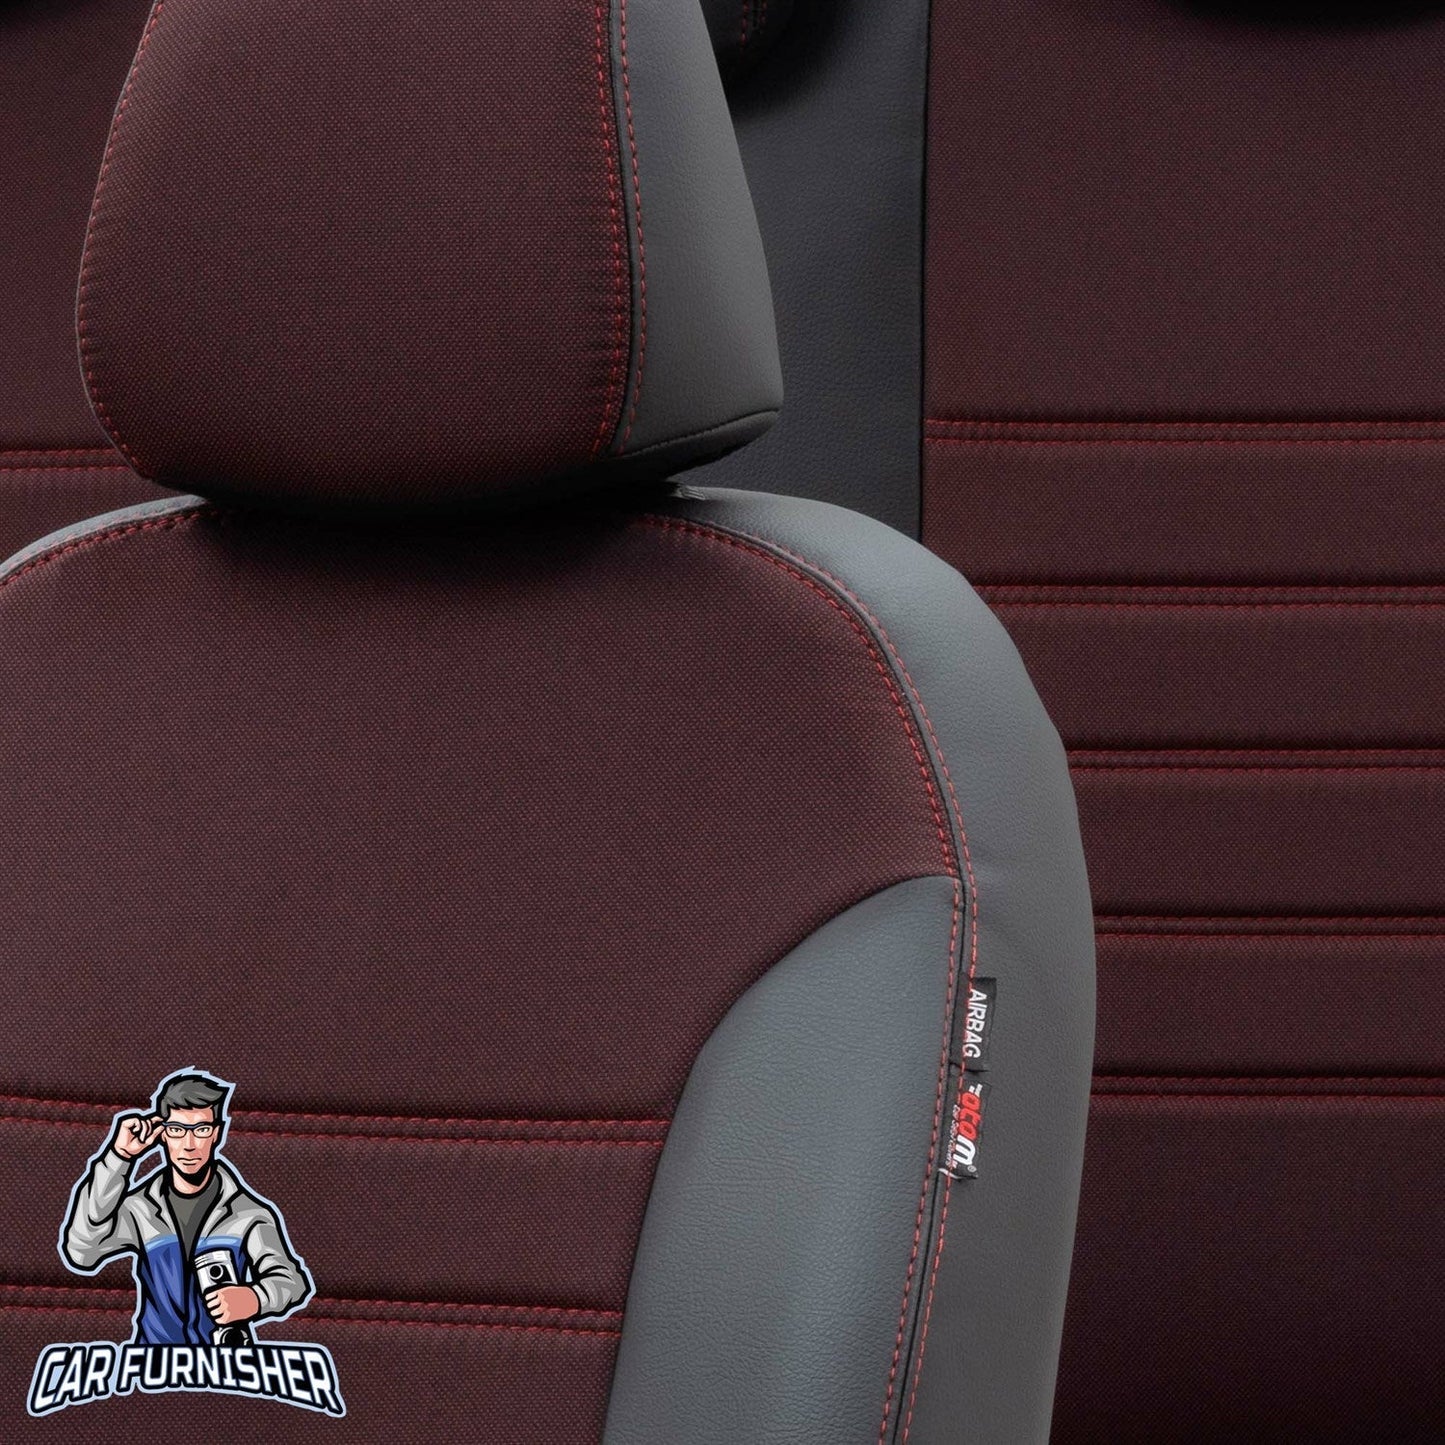 Peugeot 207 Seat Covers Paris Leather & Jacquard Design Red Leather & Jacquard Fabric